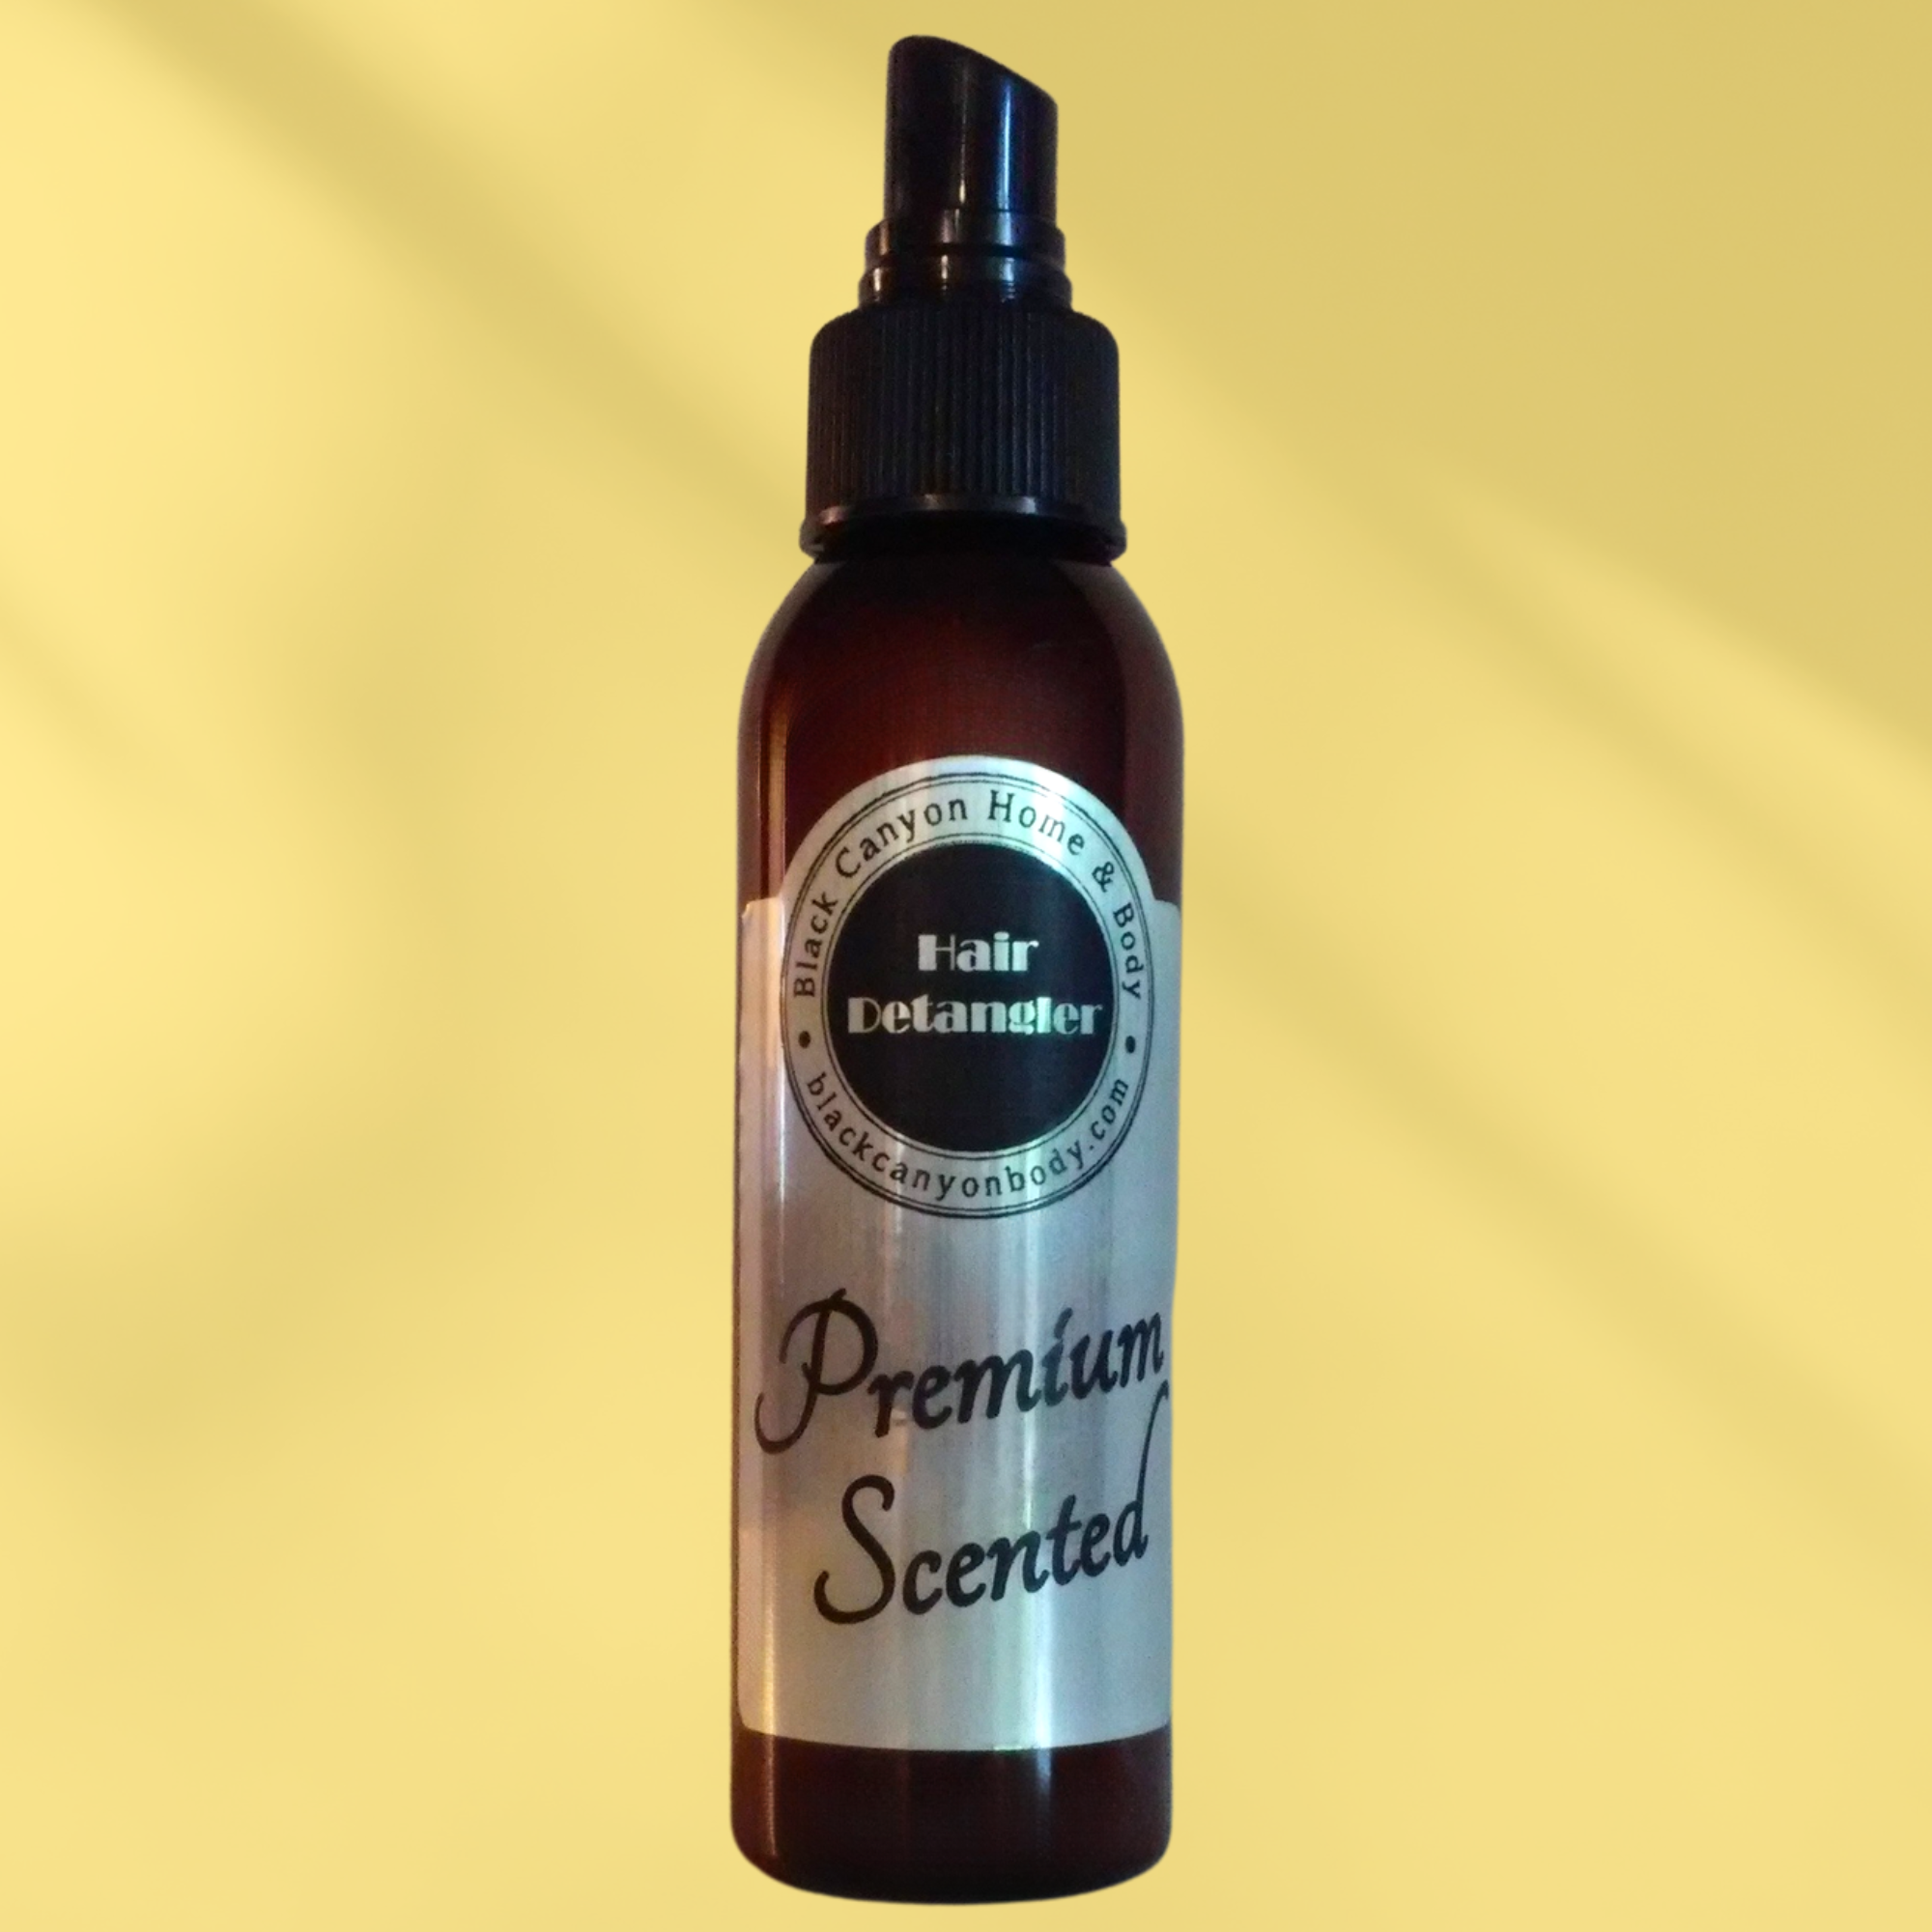 Black Canyon Apothecary Lemon Verbena Scented Hair Detangler Spray with Olive Oil